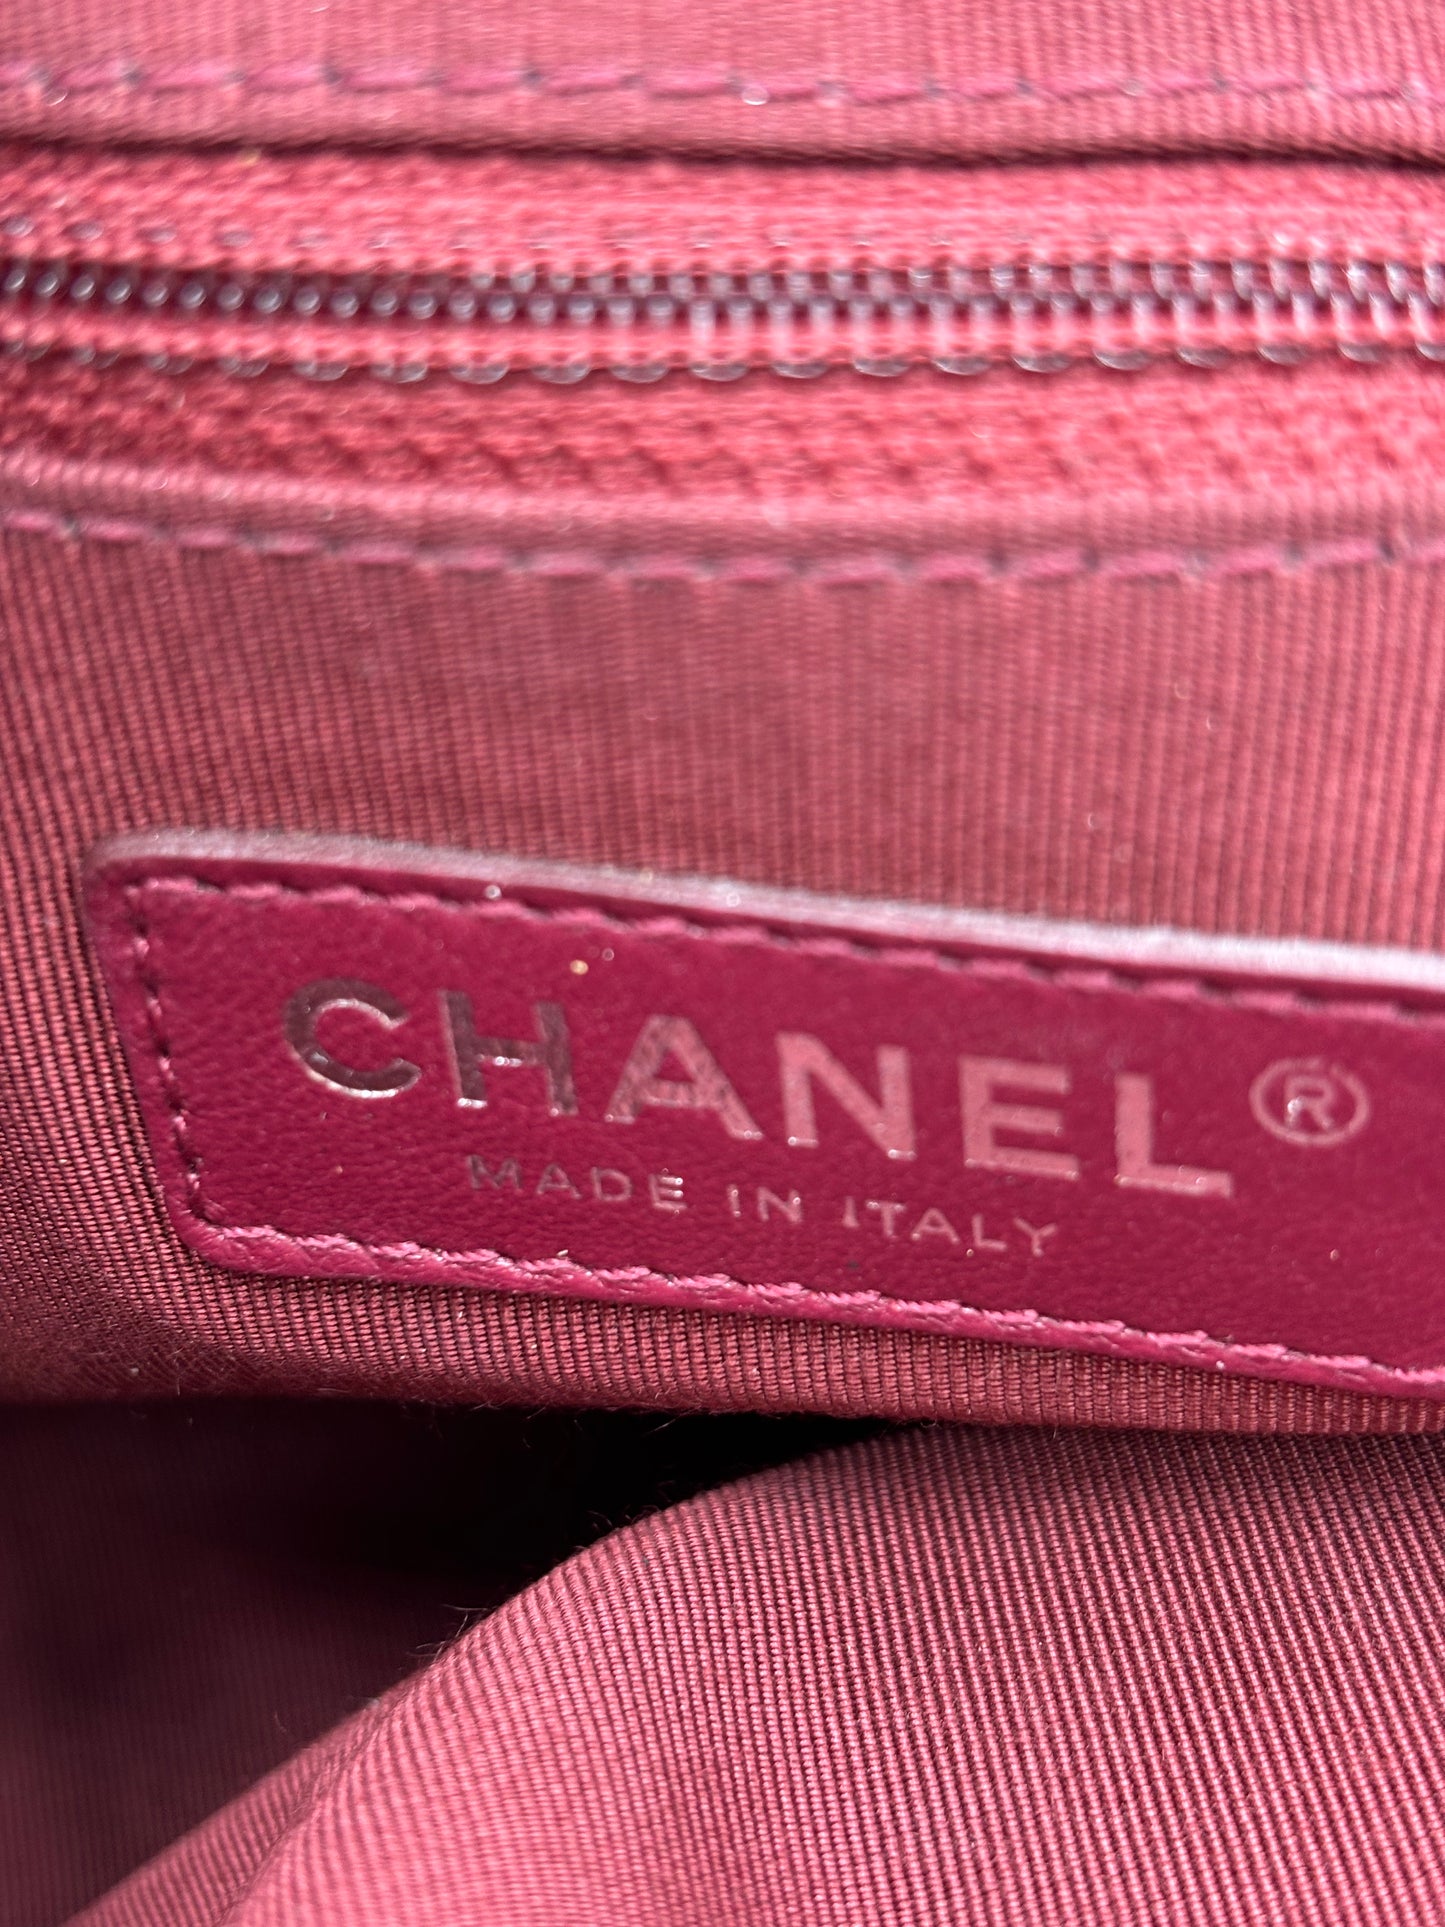 Chanel Ballerine Camera